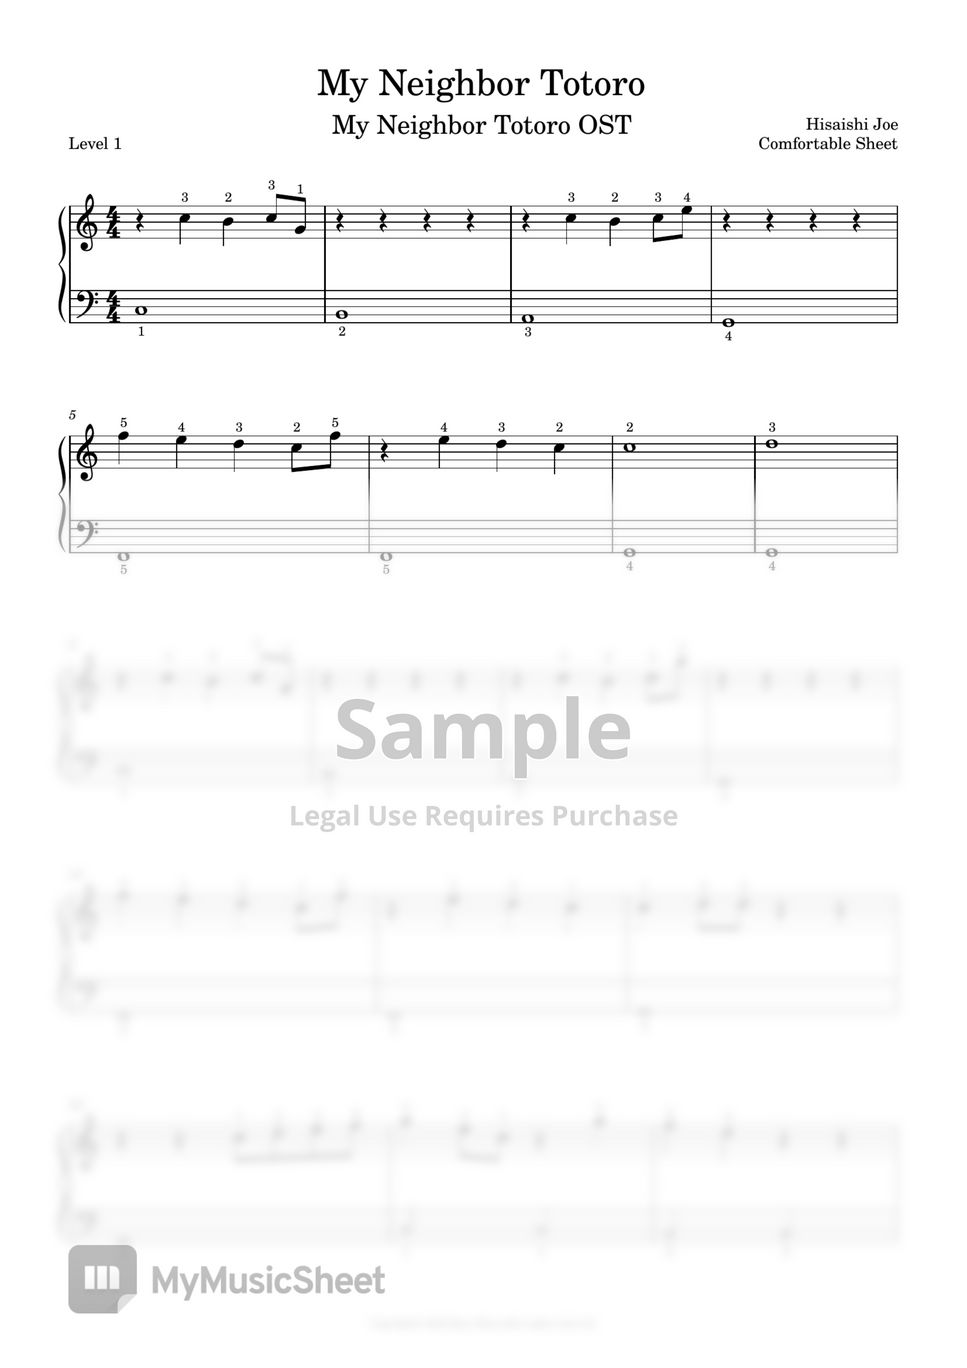 Hisaishi Joe - My Neighbor Totoro OST (Very Easy Sheet) by Comfortable Sheet